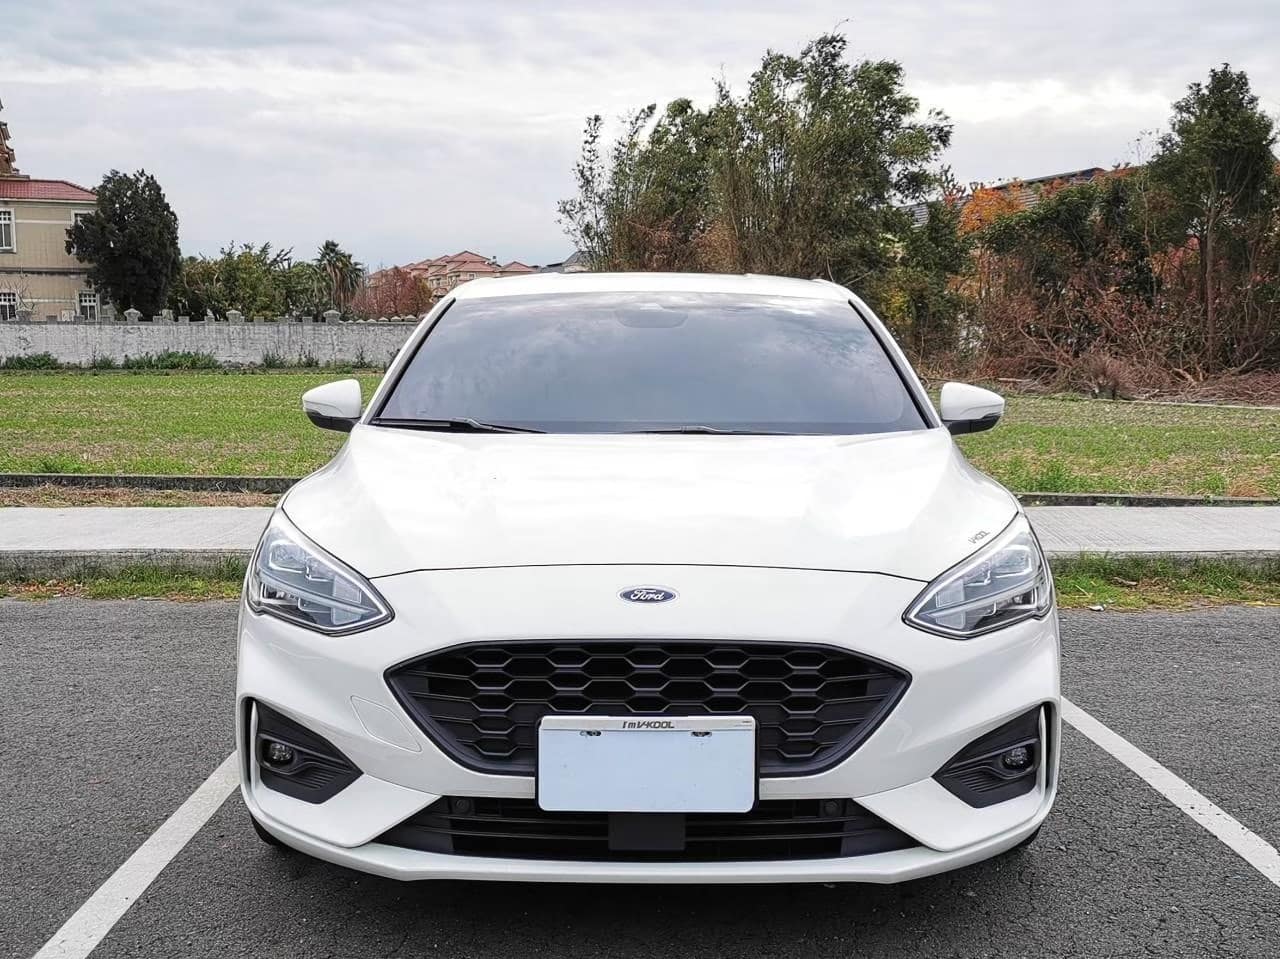 Ford_usedcar_2019_Focus_5D_ST-LINE_90048km_Ford中古車_Focus_圖片